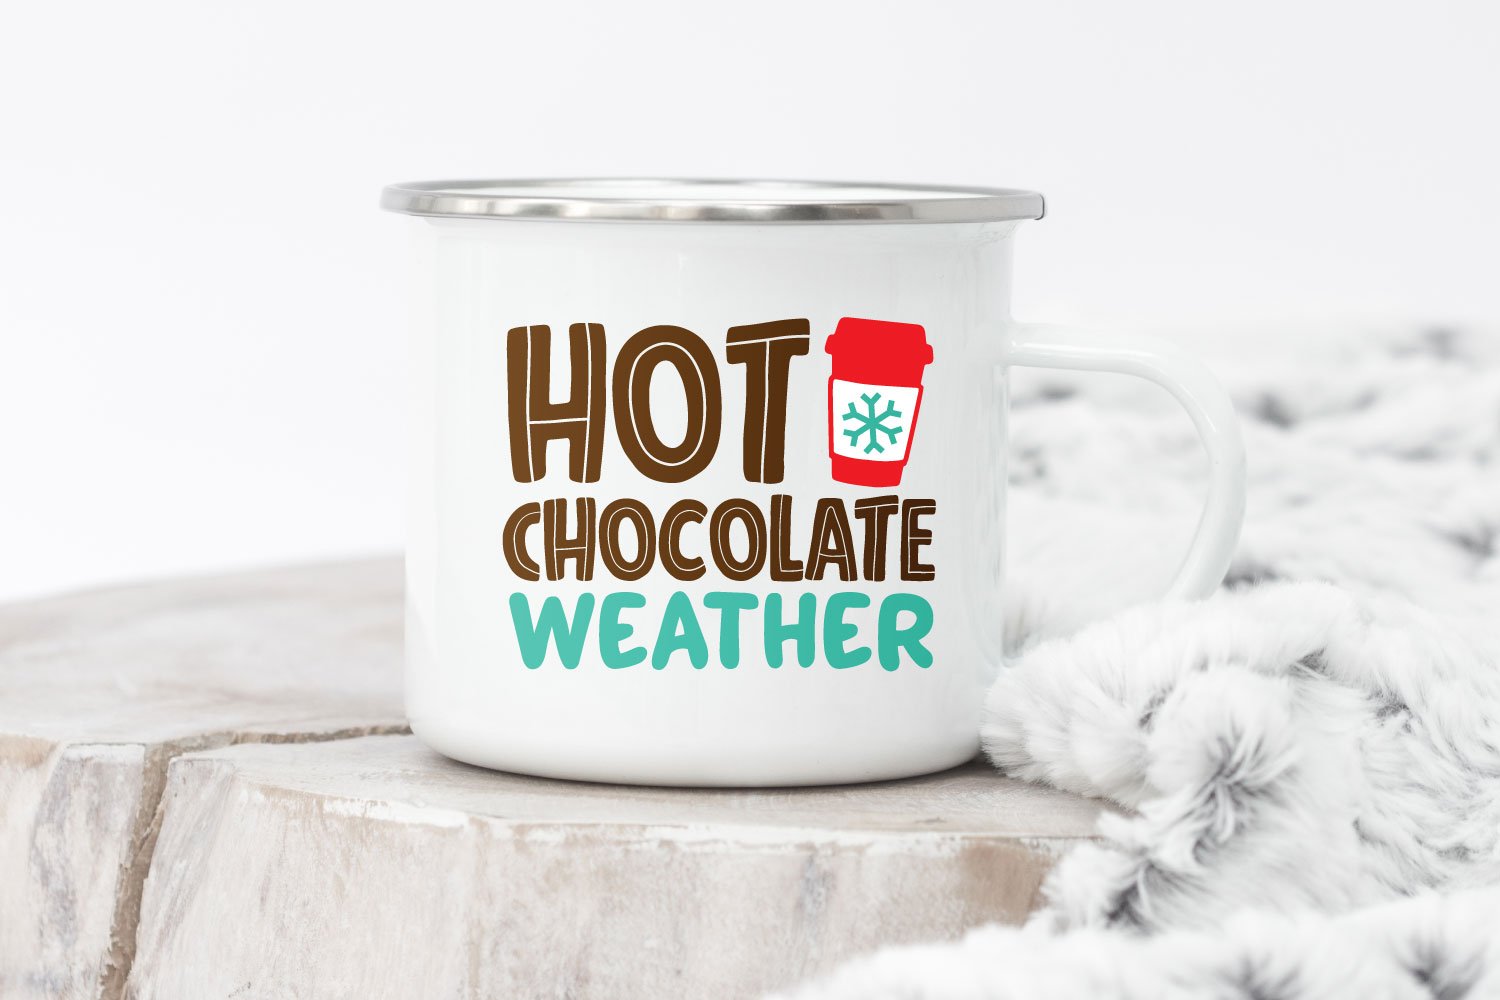 Hot Chocolate Weather SVG